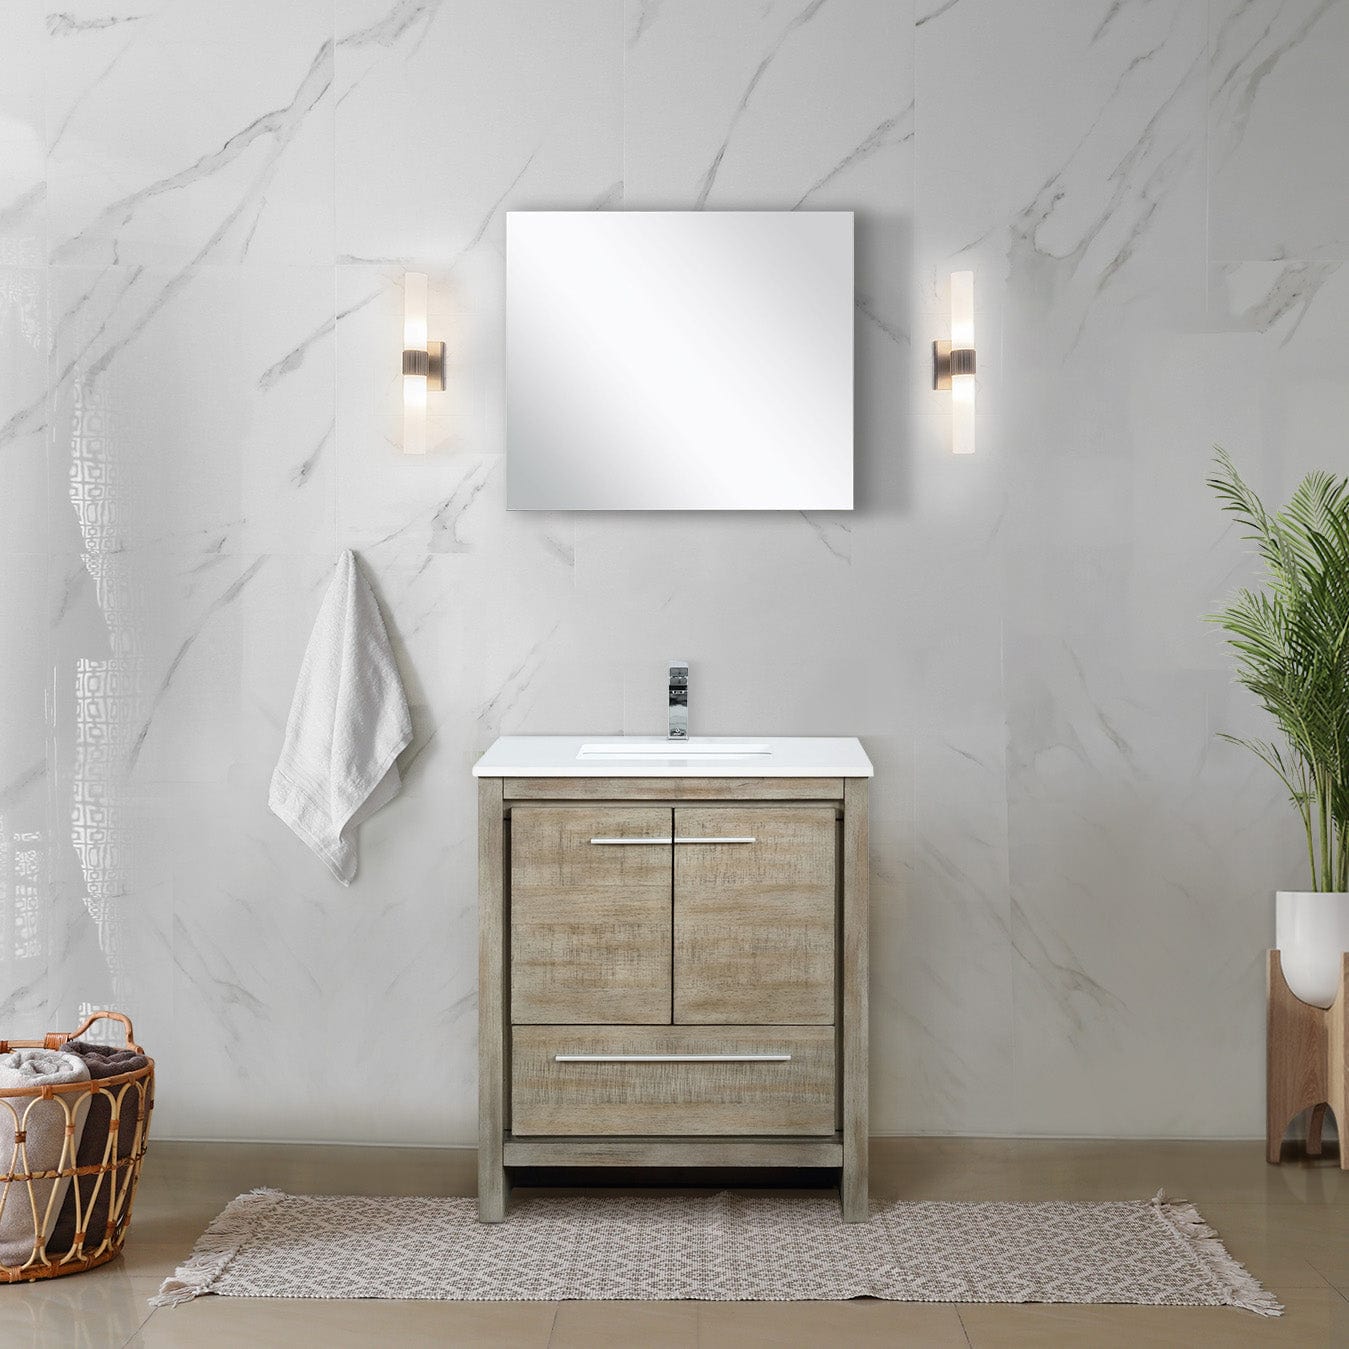 Lexora Bathroom Vanity Cultured Marble / Chrome Faucet / No Mirror Lafarre 30" Rustic Acacia Bathroom Vanity